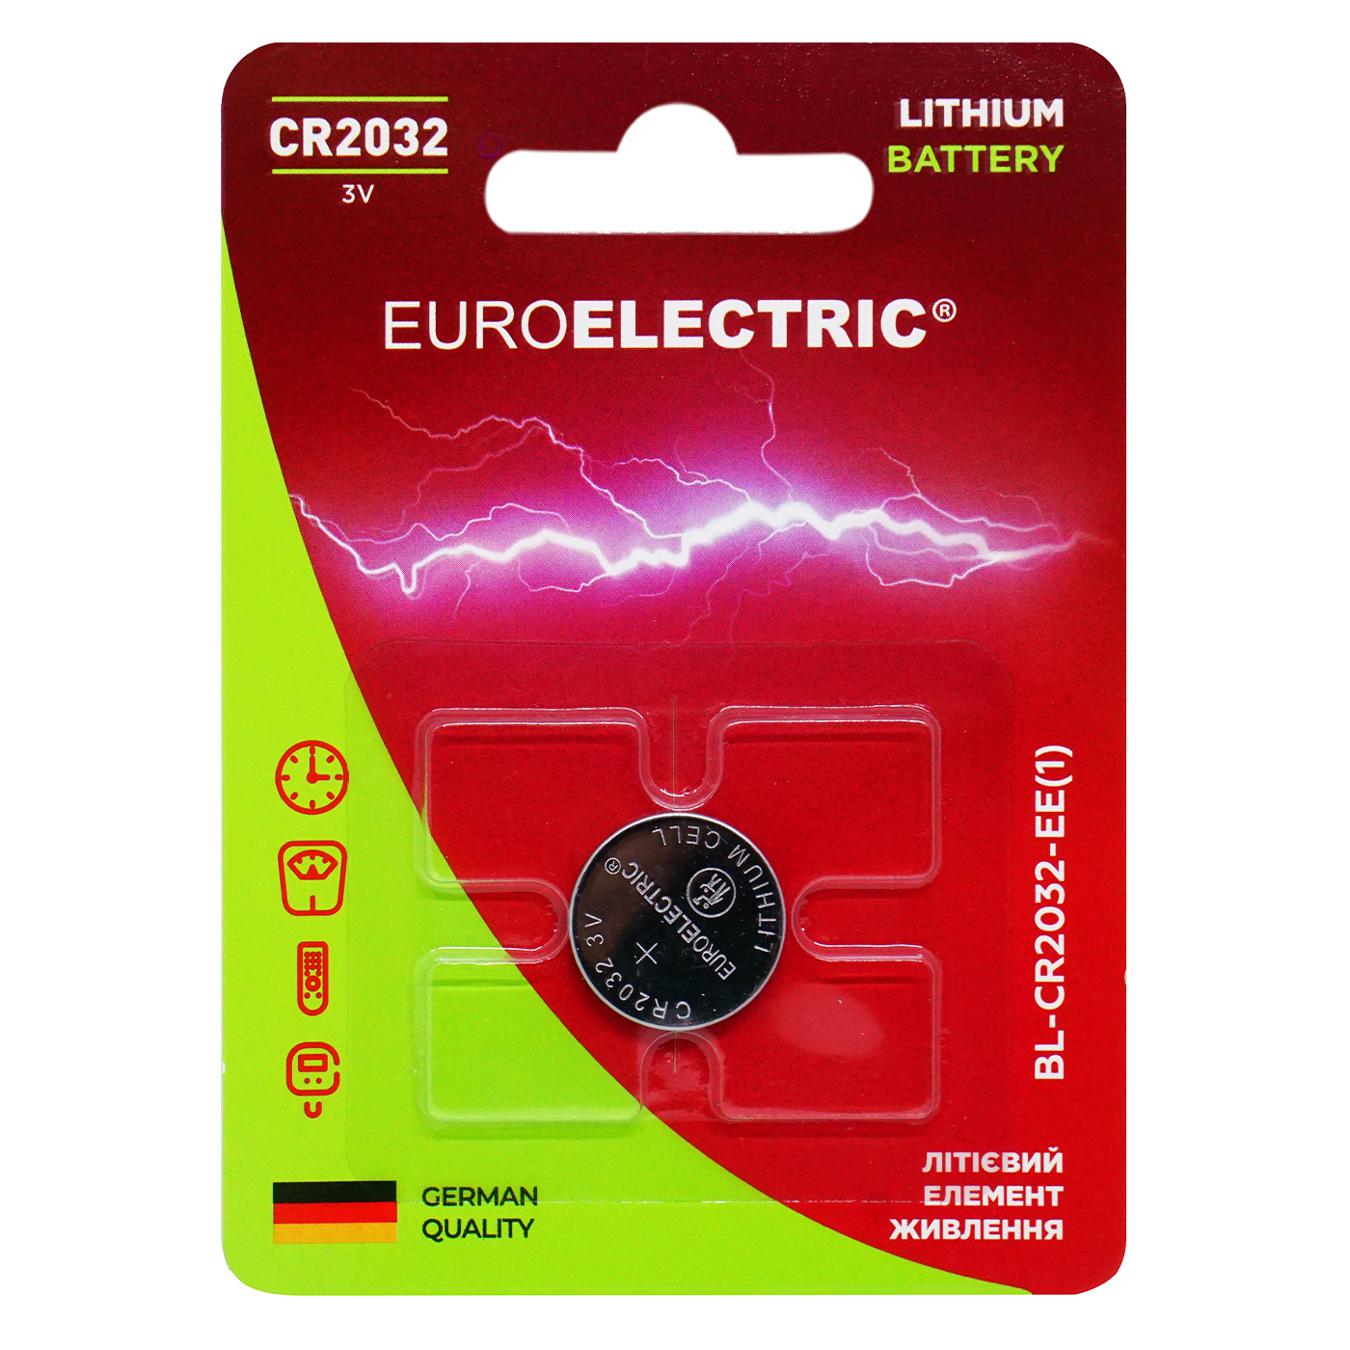 Lithium battery Euroelectric CR2032 3V 1 pc